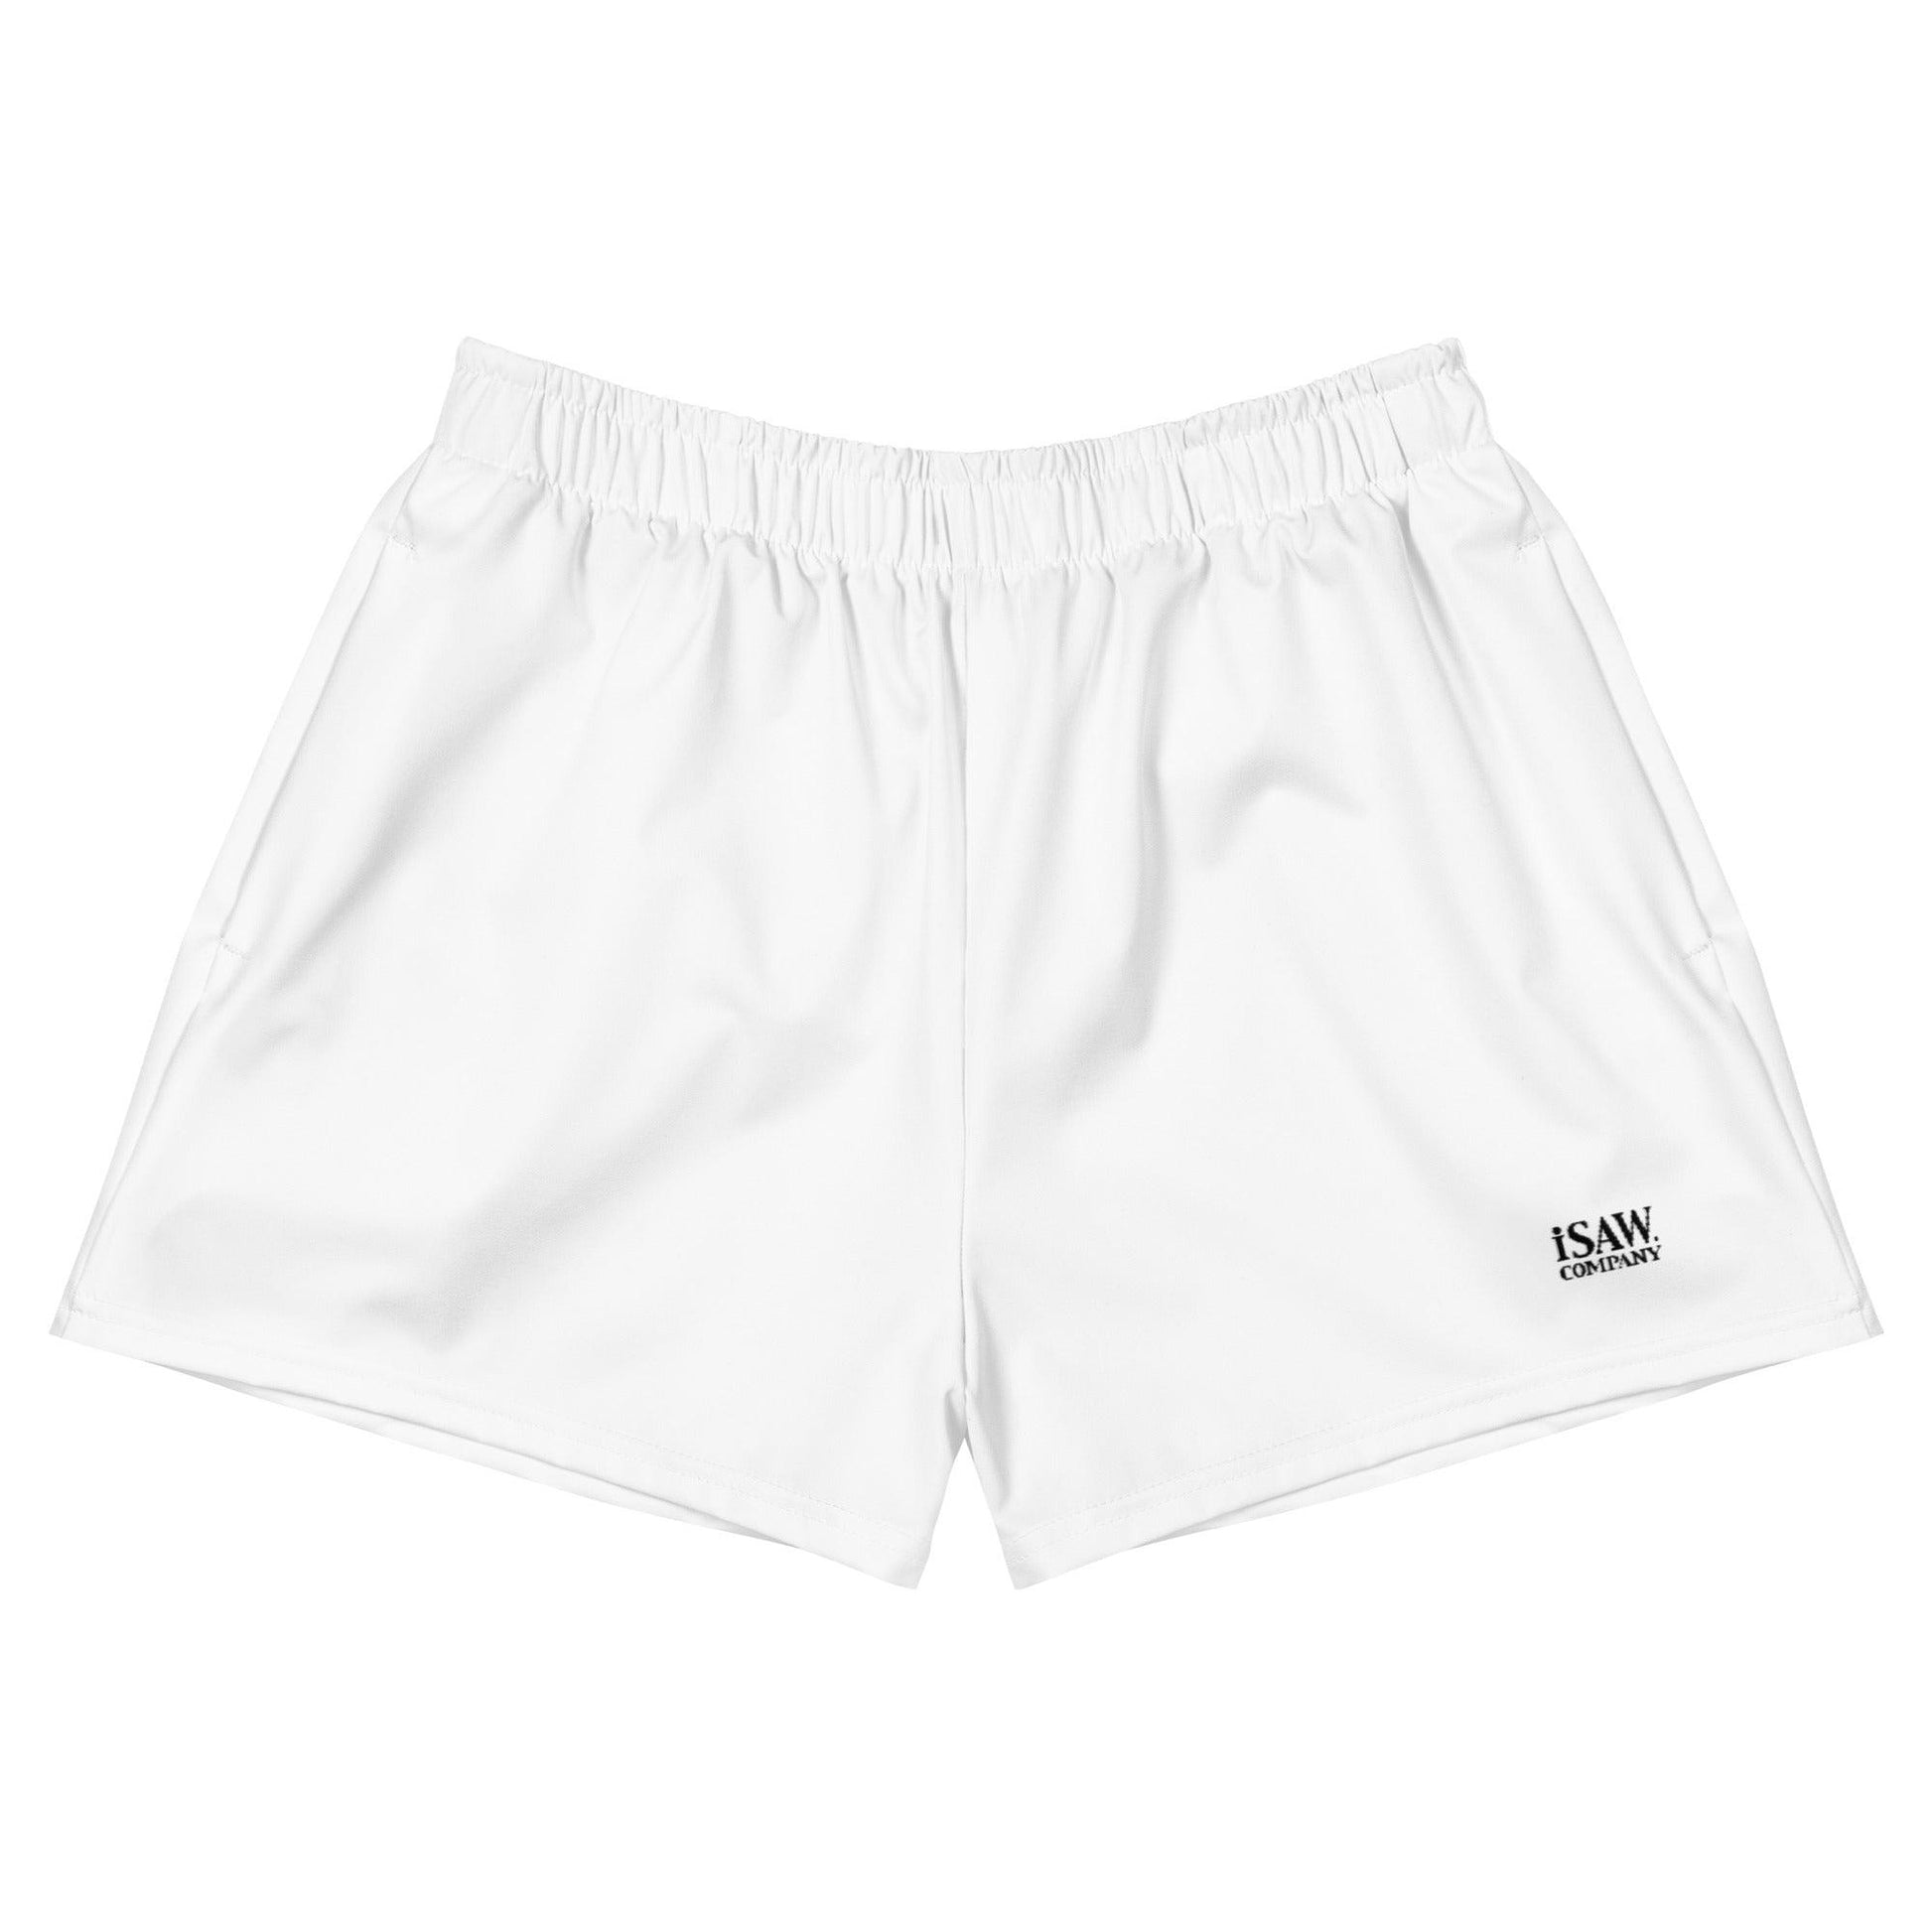 iSAW Womens White Athletic Shorts - iSAW Company